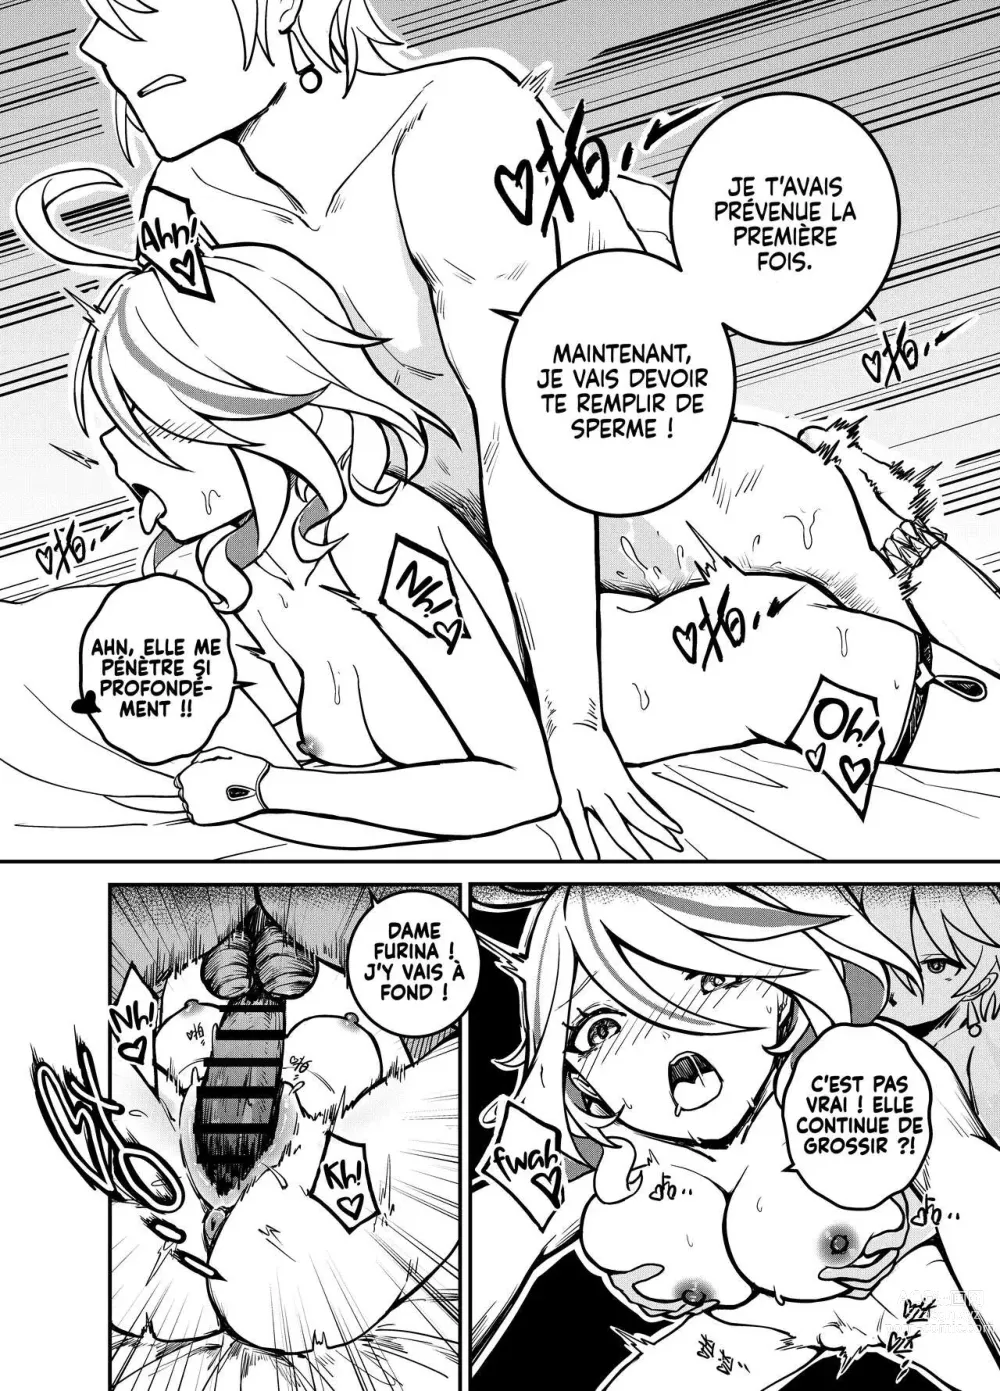 Page 6 of doujinshi Stupide Furina